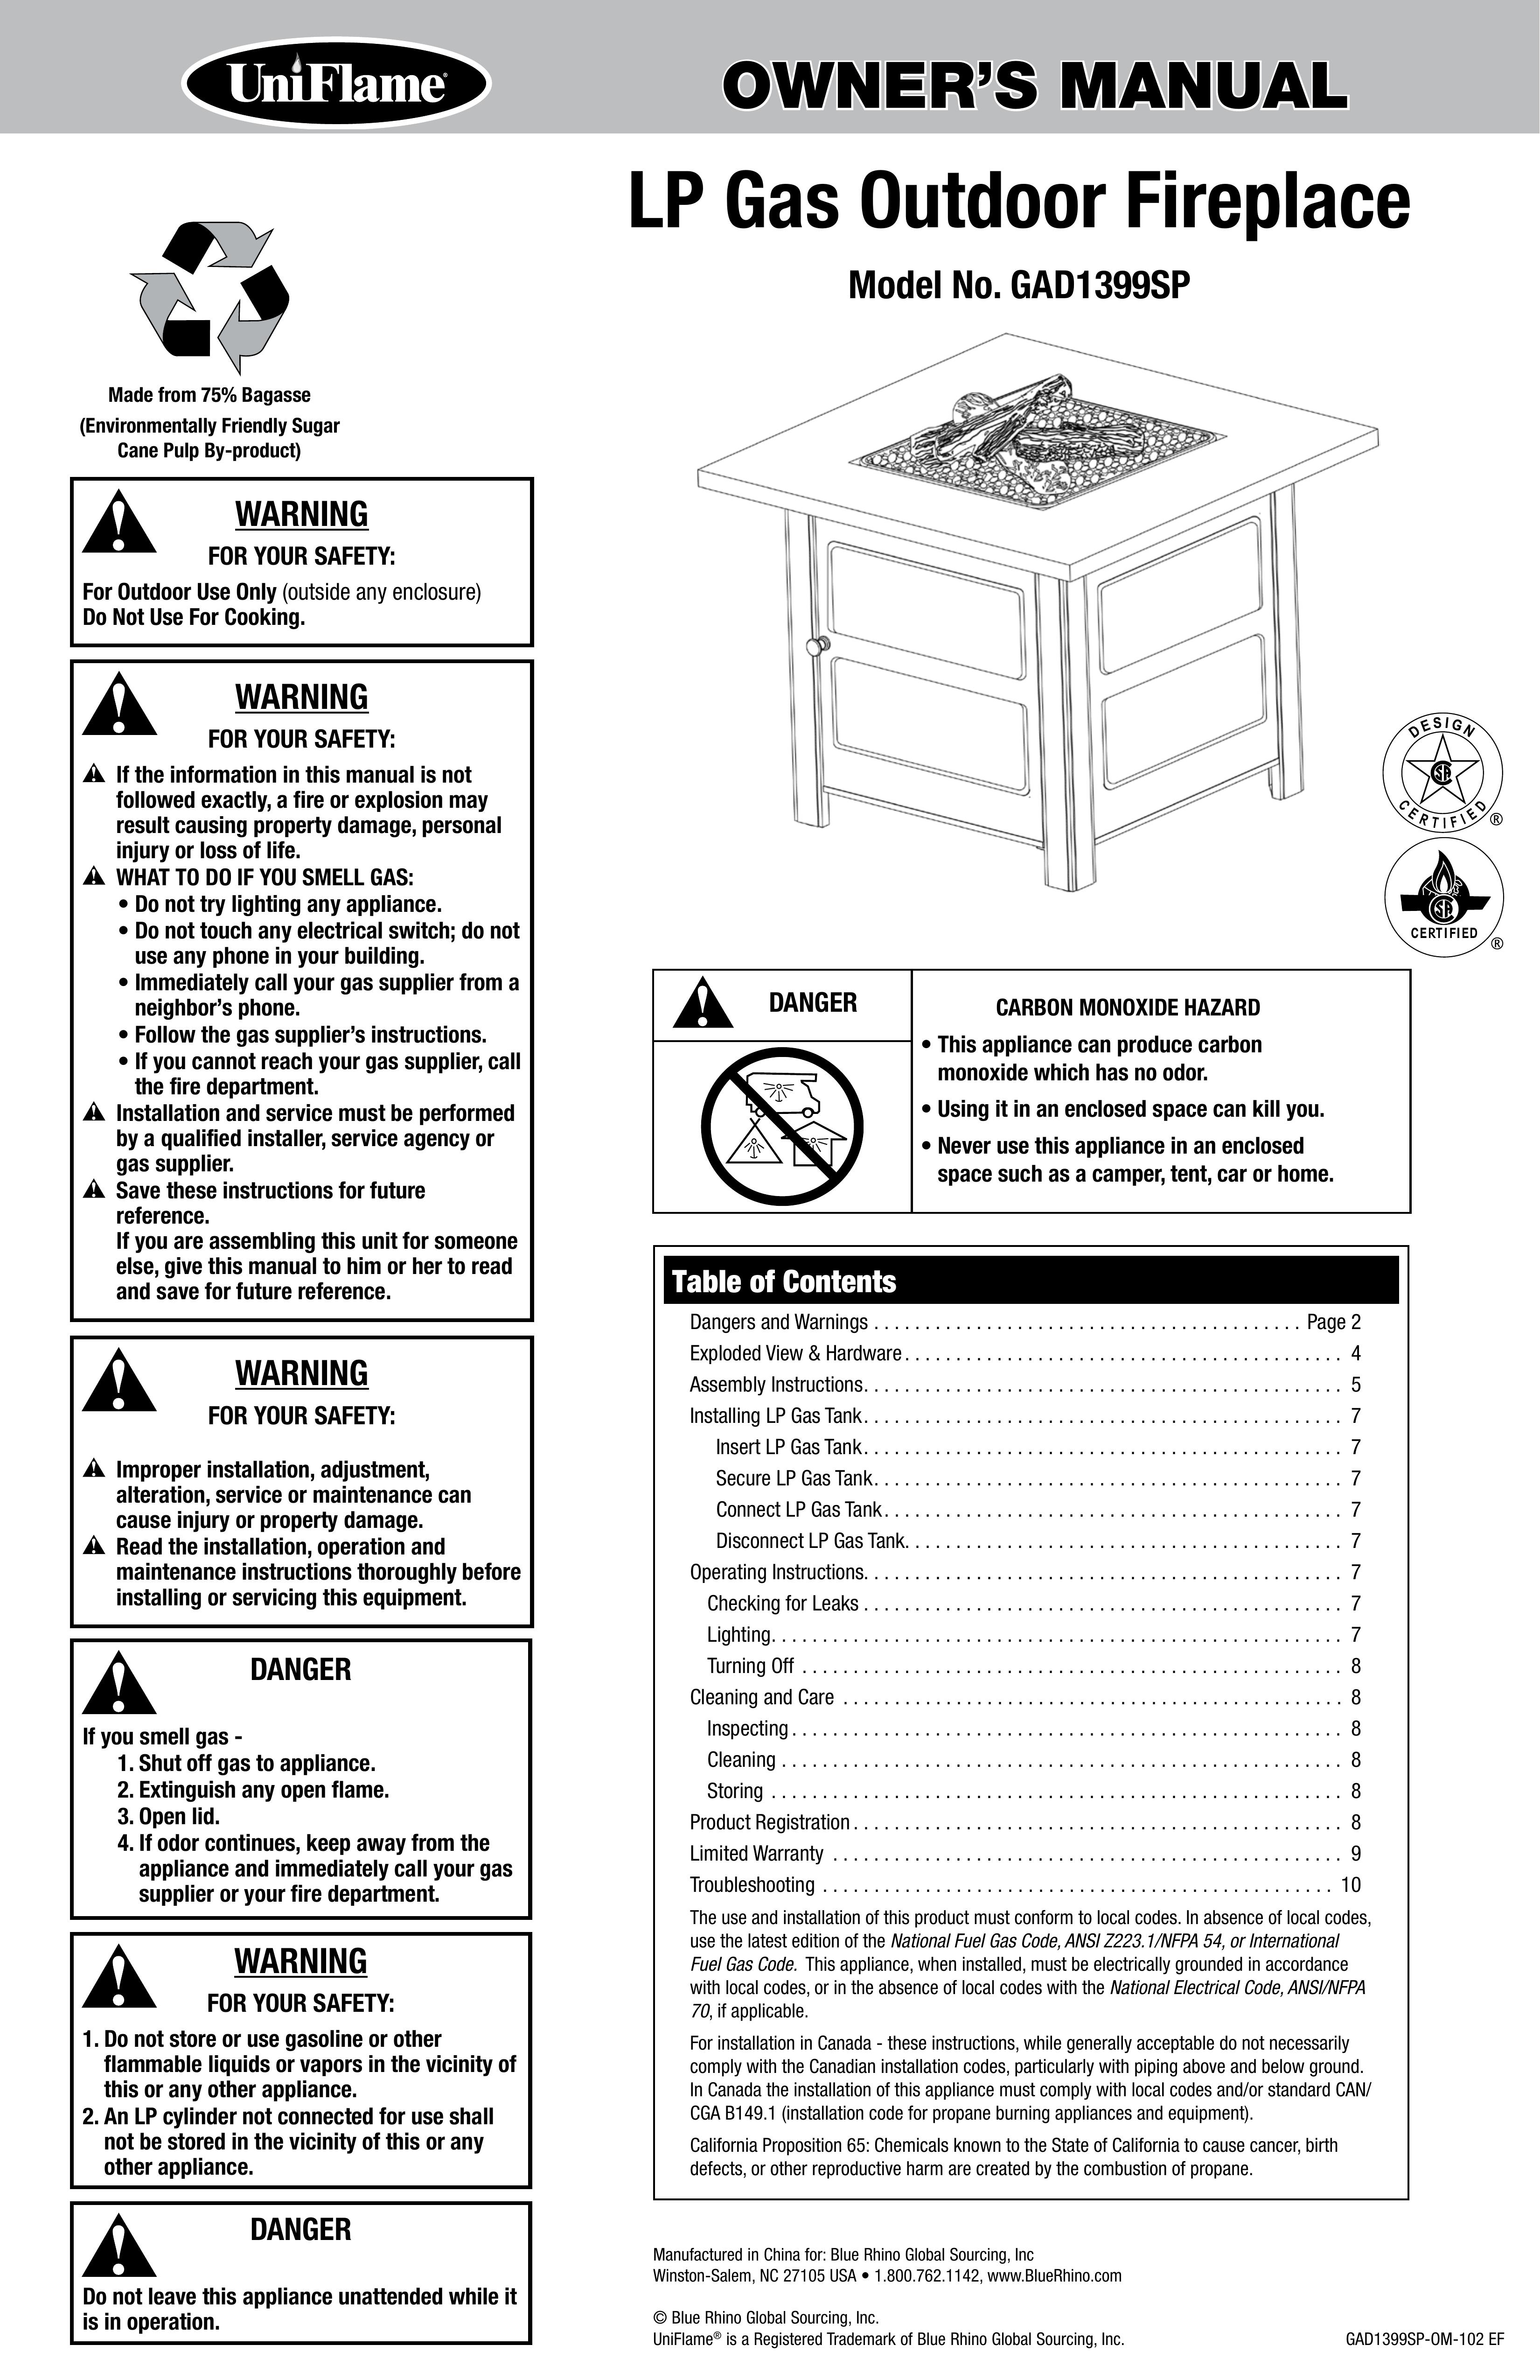 Uniflame GAD1399SP Outdoor Fireplace User Manual